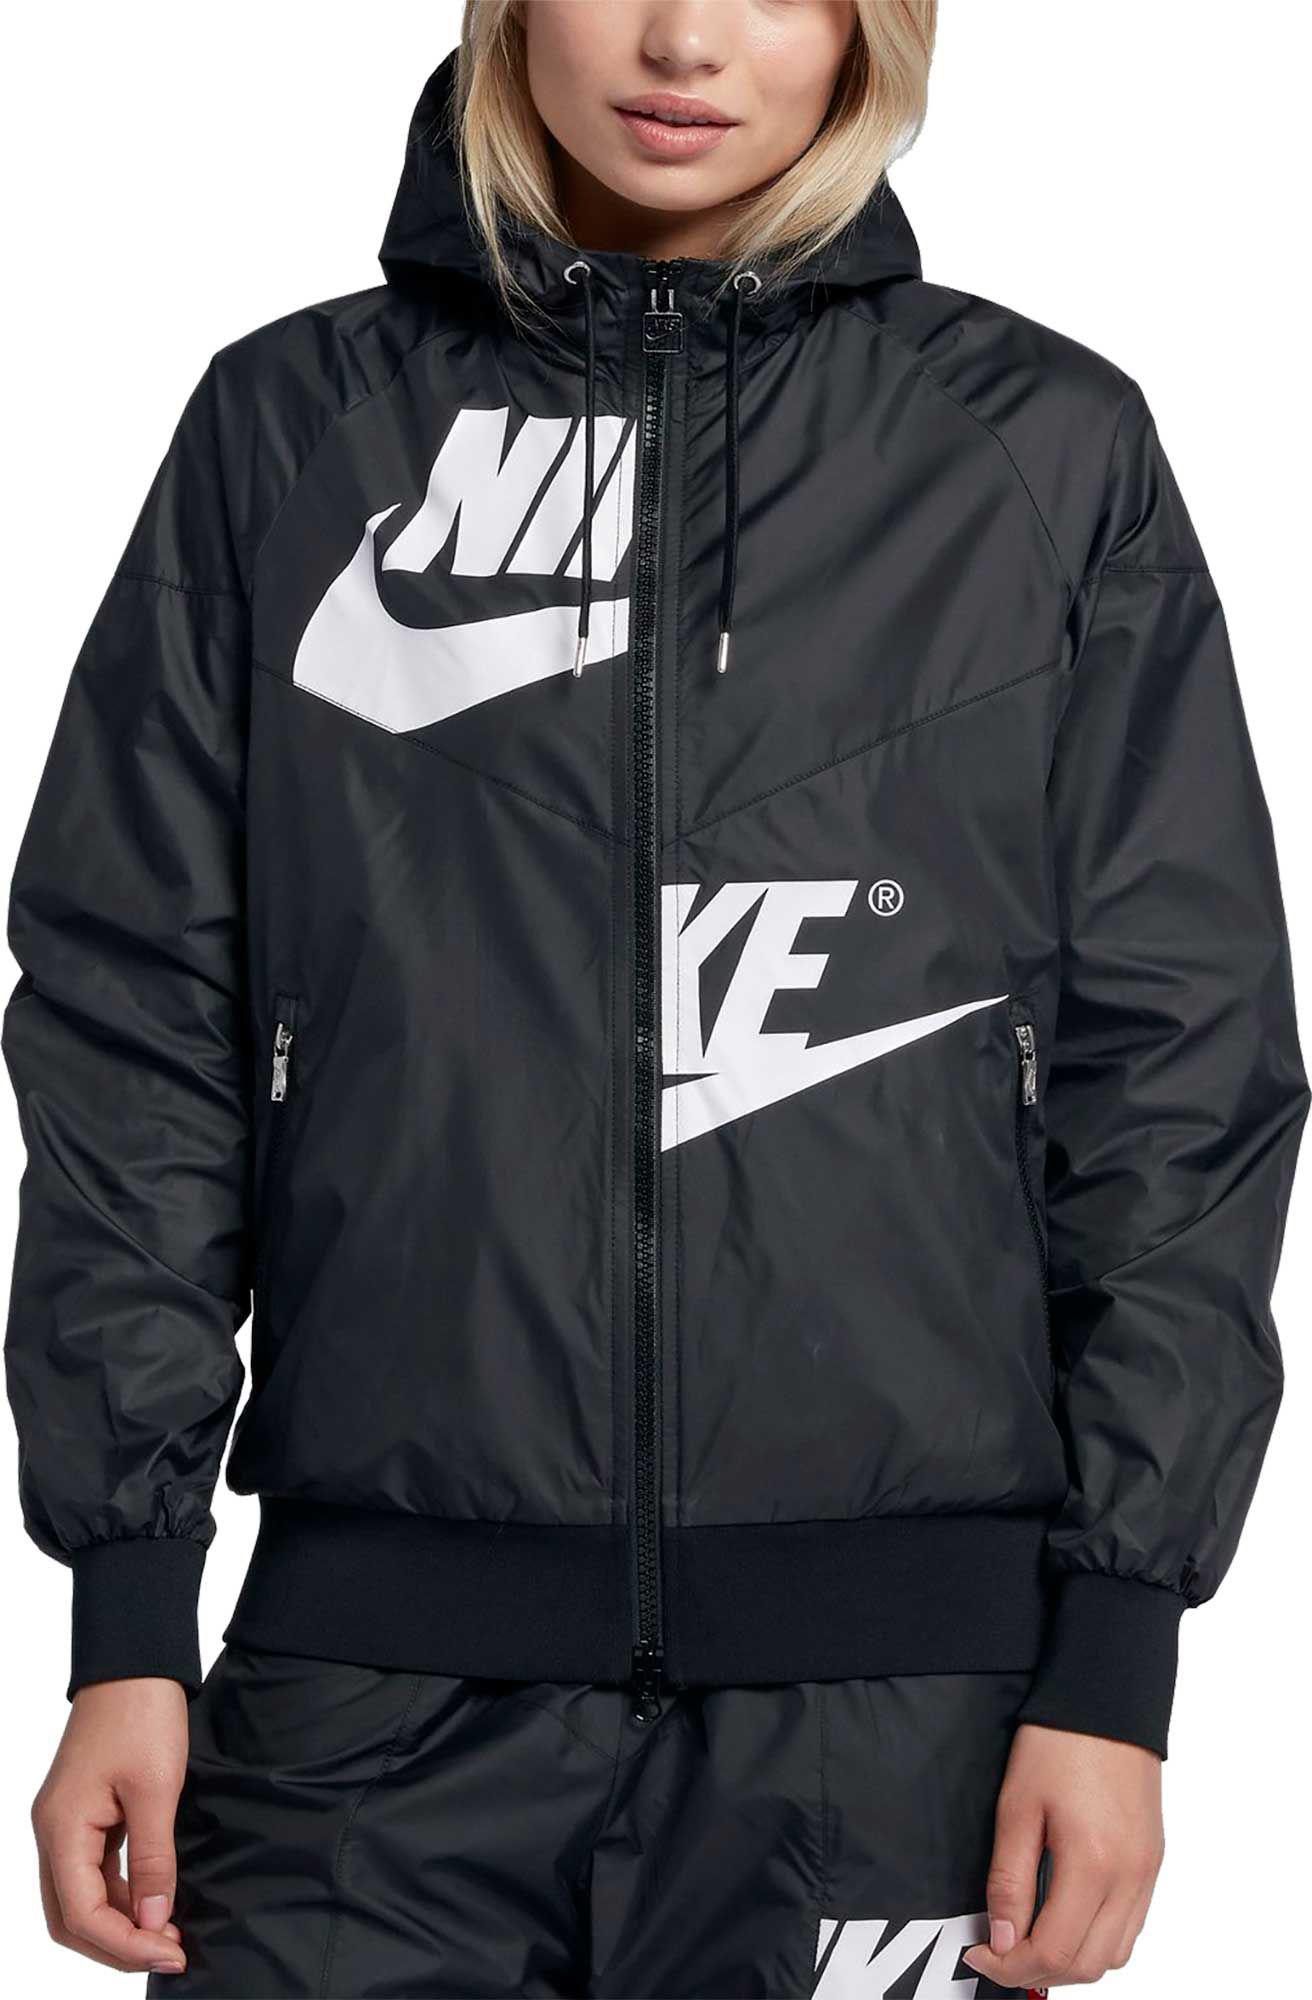 Nike Synthetic Sportswear Graphic Windrunner Jacket in Black/Black (Black)  - Lyst